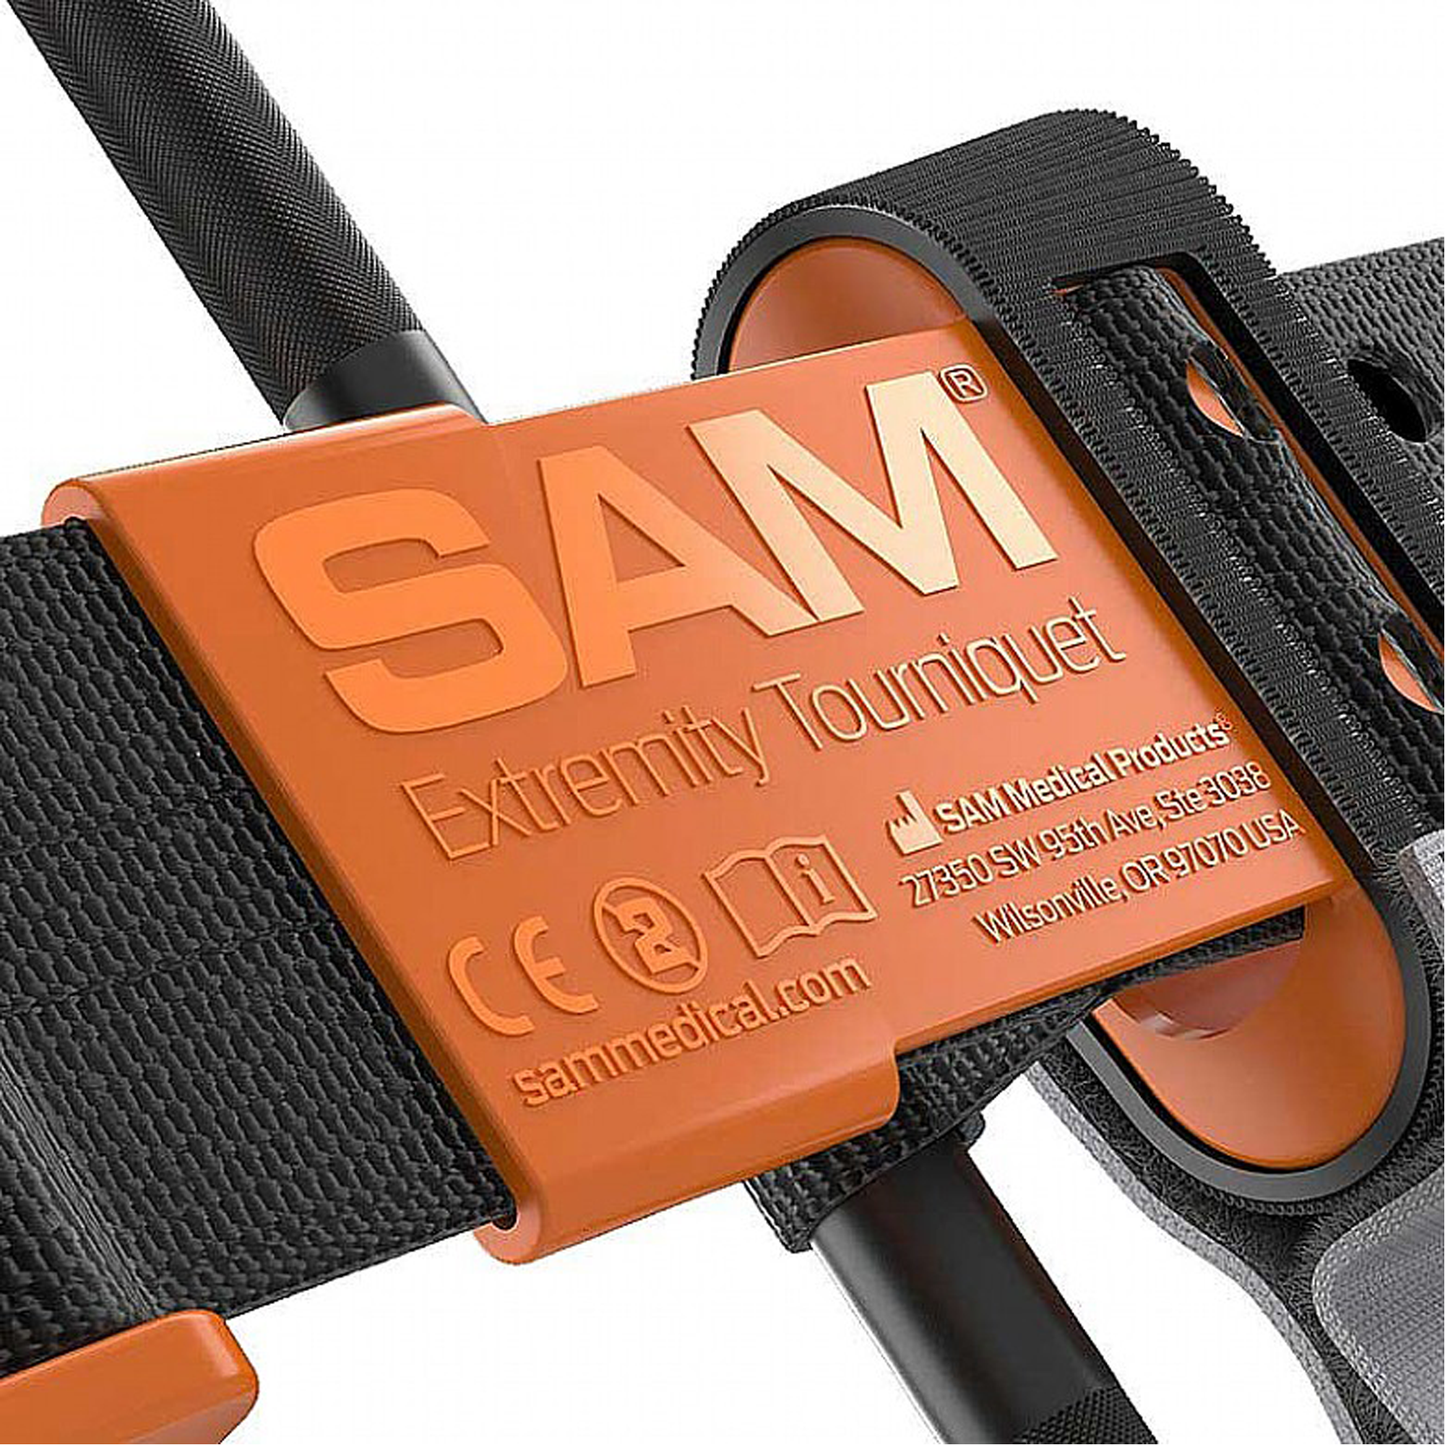 SAM® XT Extremity Tourniquet - Black & Orange